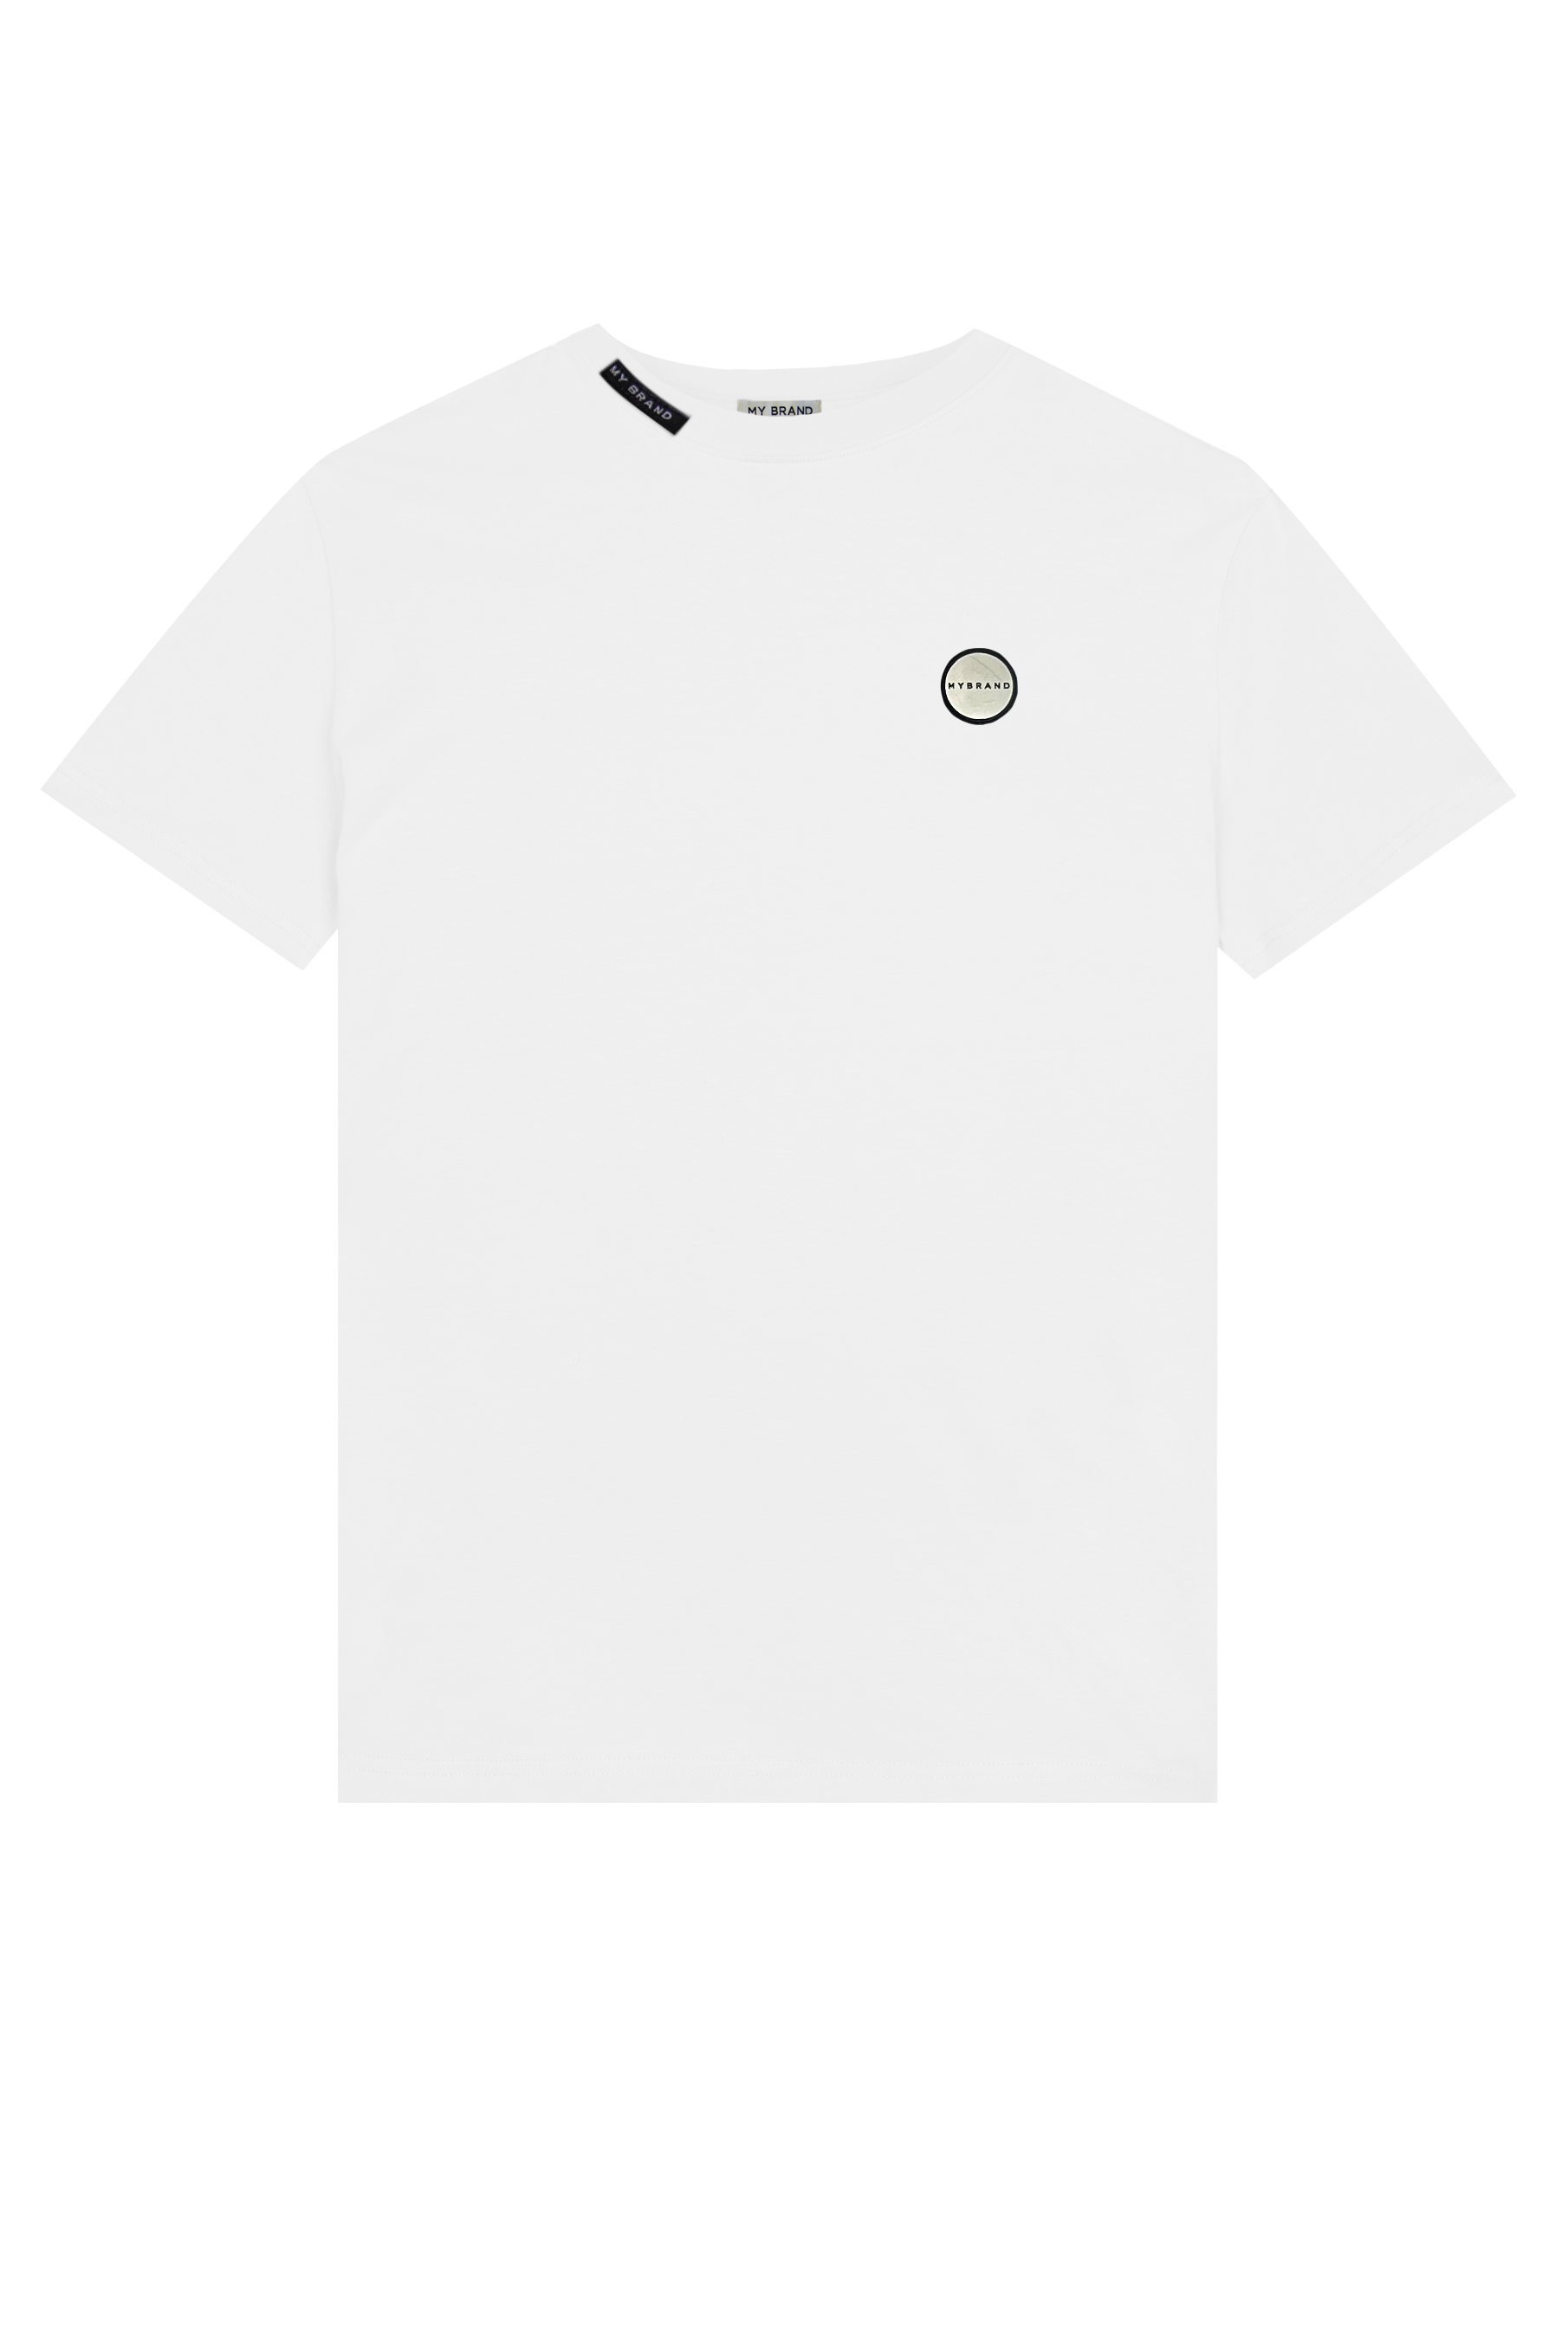 Basic Capsule White Tshirt